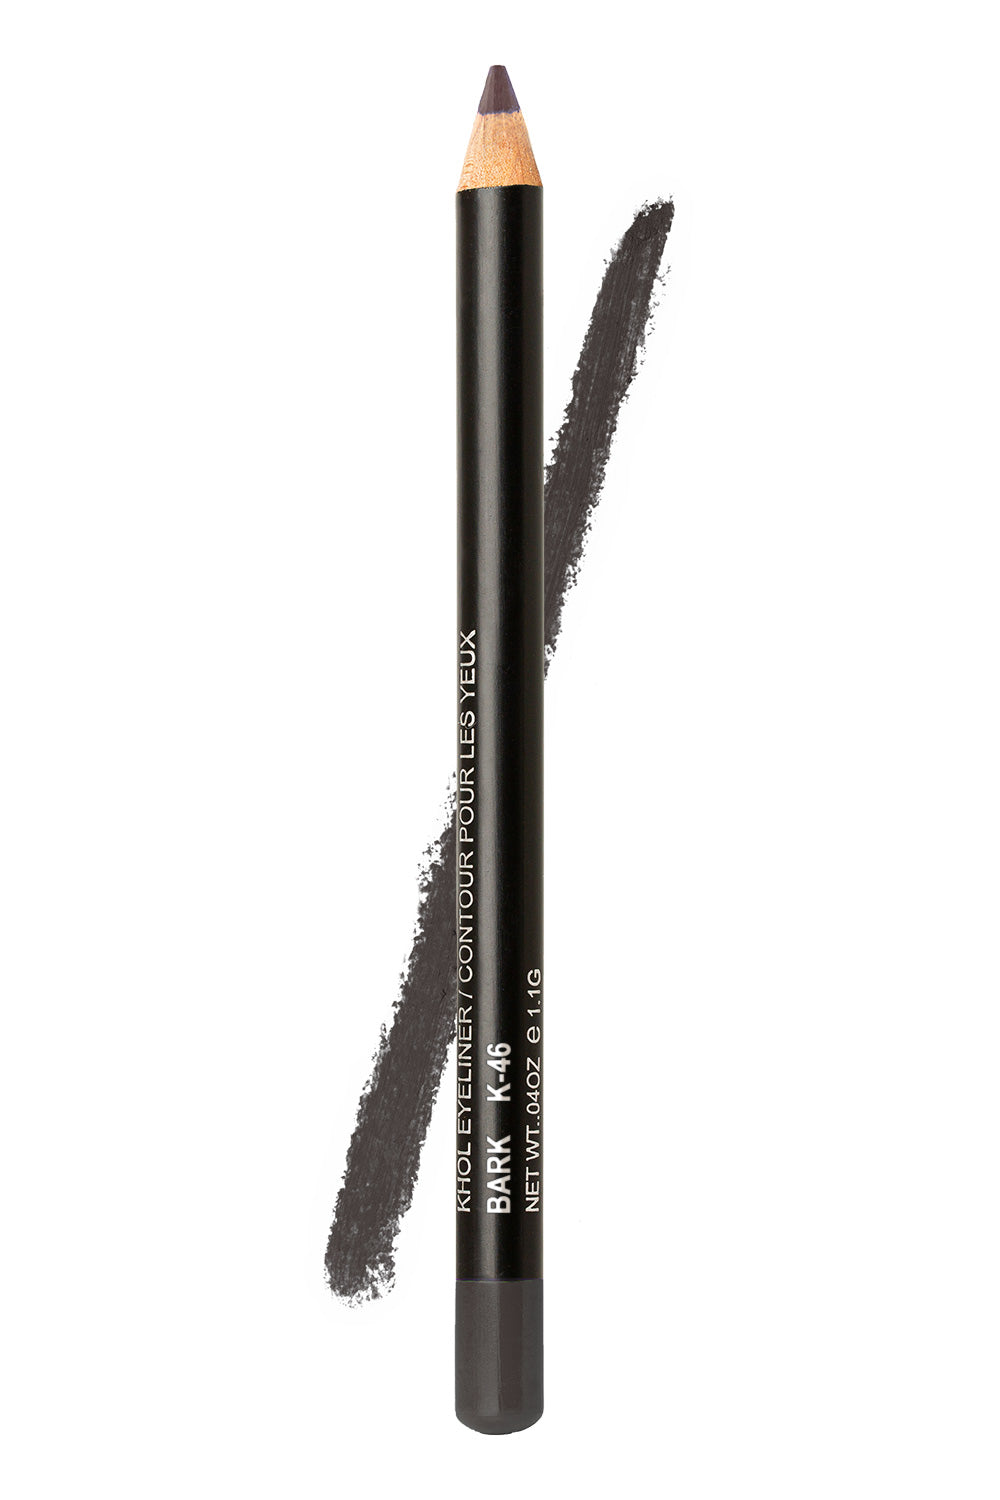 Bark - Type 2 Eyeliner Pencil | Eyeliner